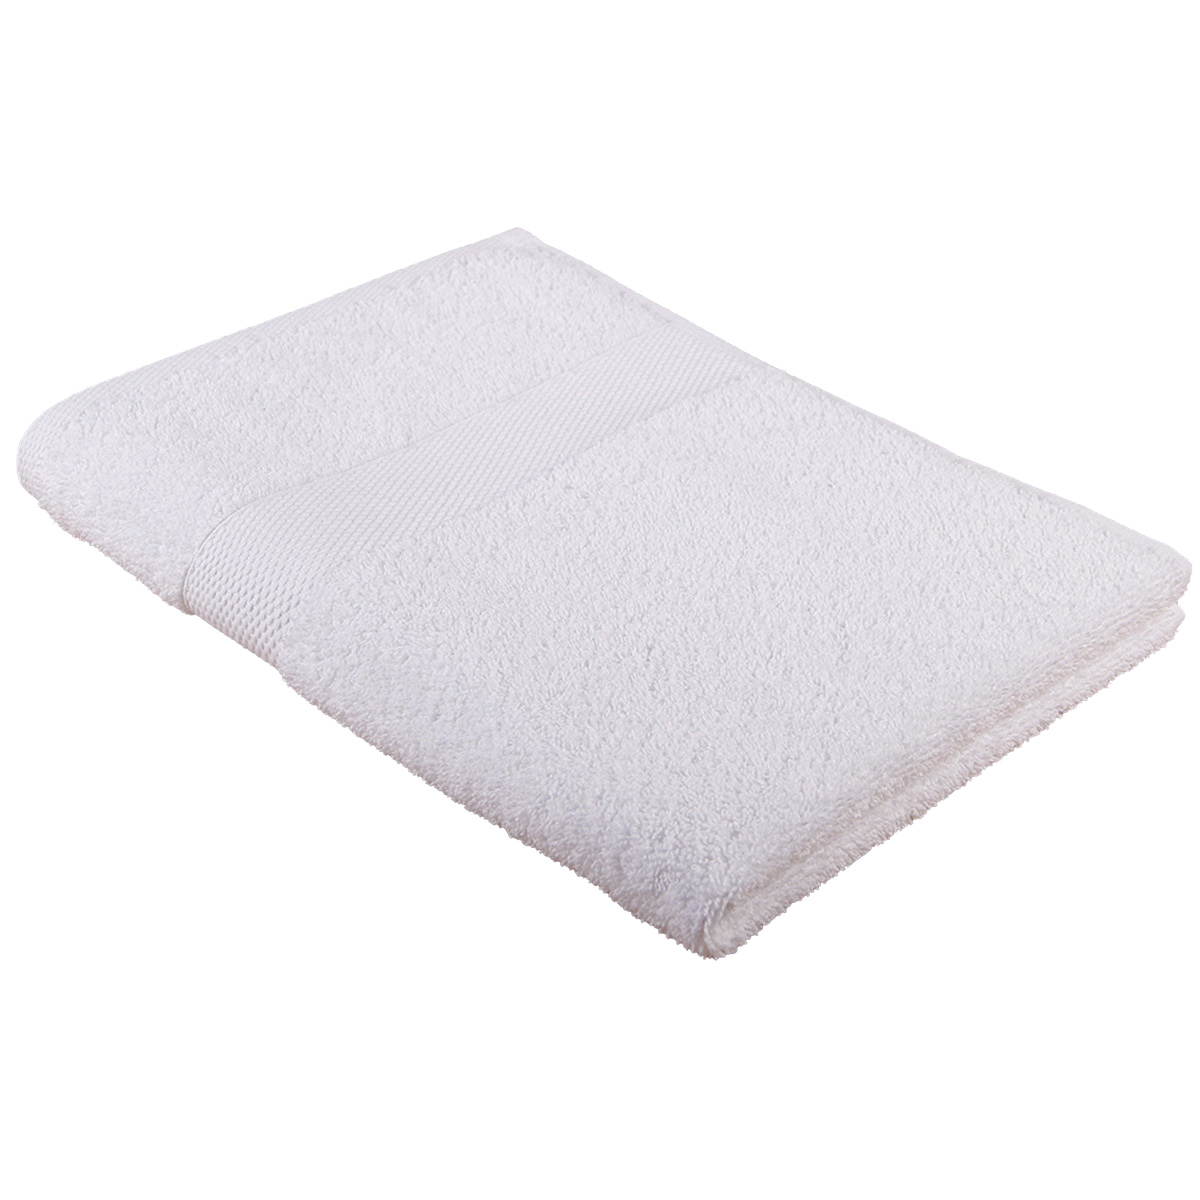 Maxi drap de bain 100x150 cm 500 gr/m2 blanc